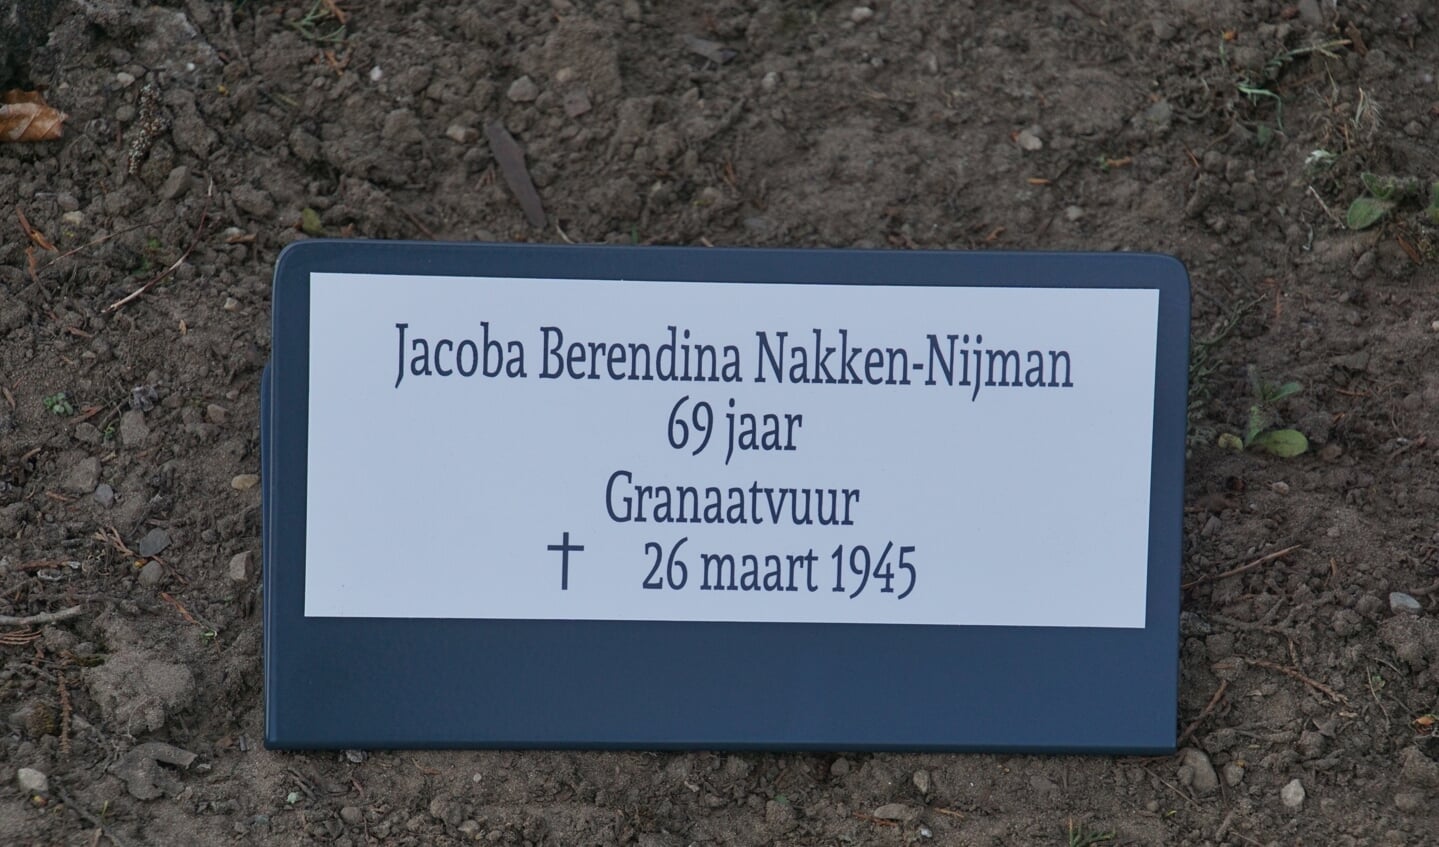 Jacoba B. Nakken-Nijman, 69. granaatvuur